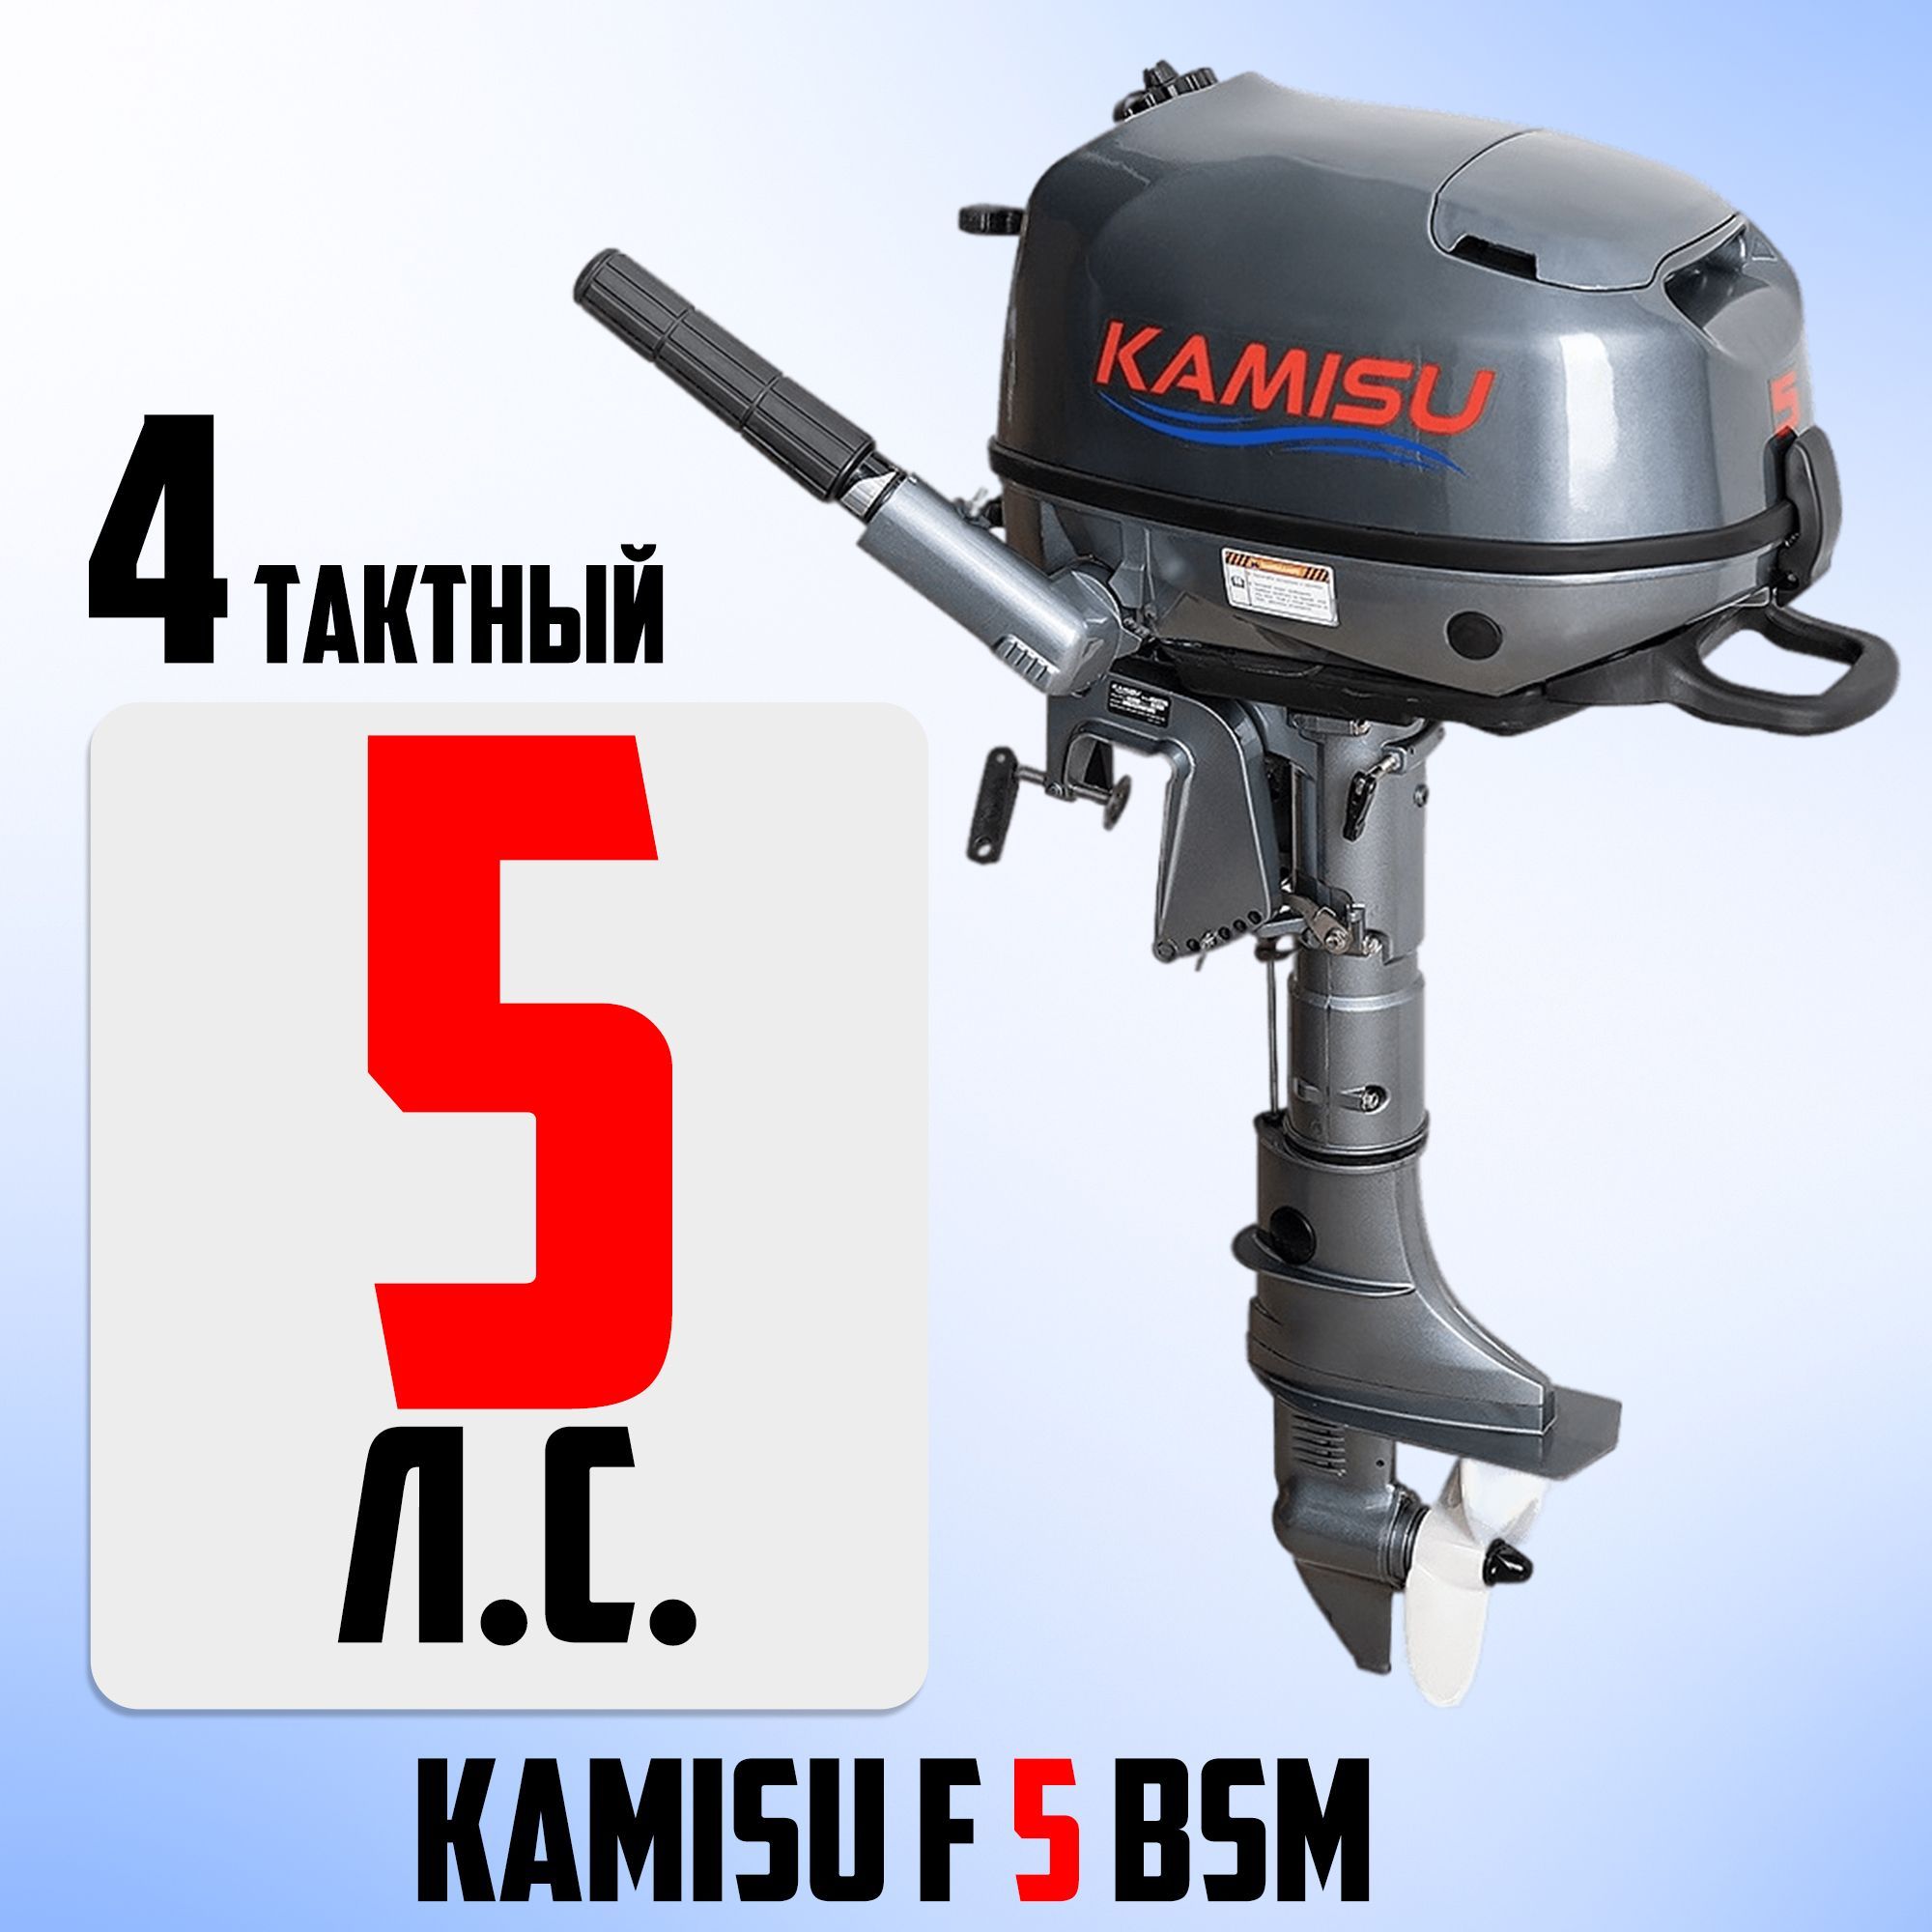 Kamisu t 9.8. Kamisu лодочные моторы. Kamisu f 5 BMS 4-Х тактный. Hdx t 3.6 CBMS отзывы. Лодочный мотор Moratti buddy 34.